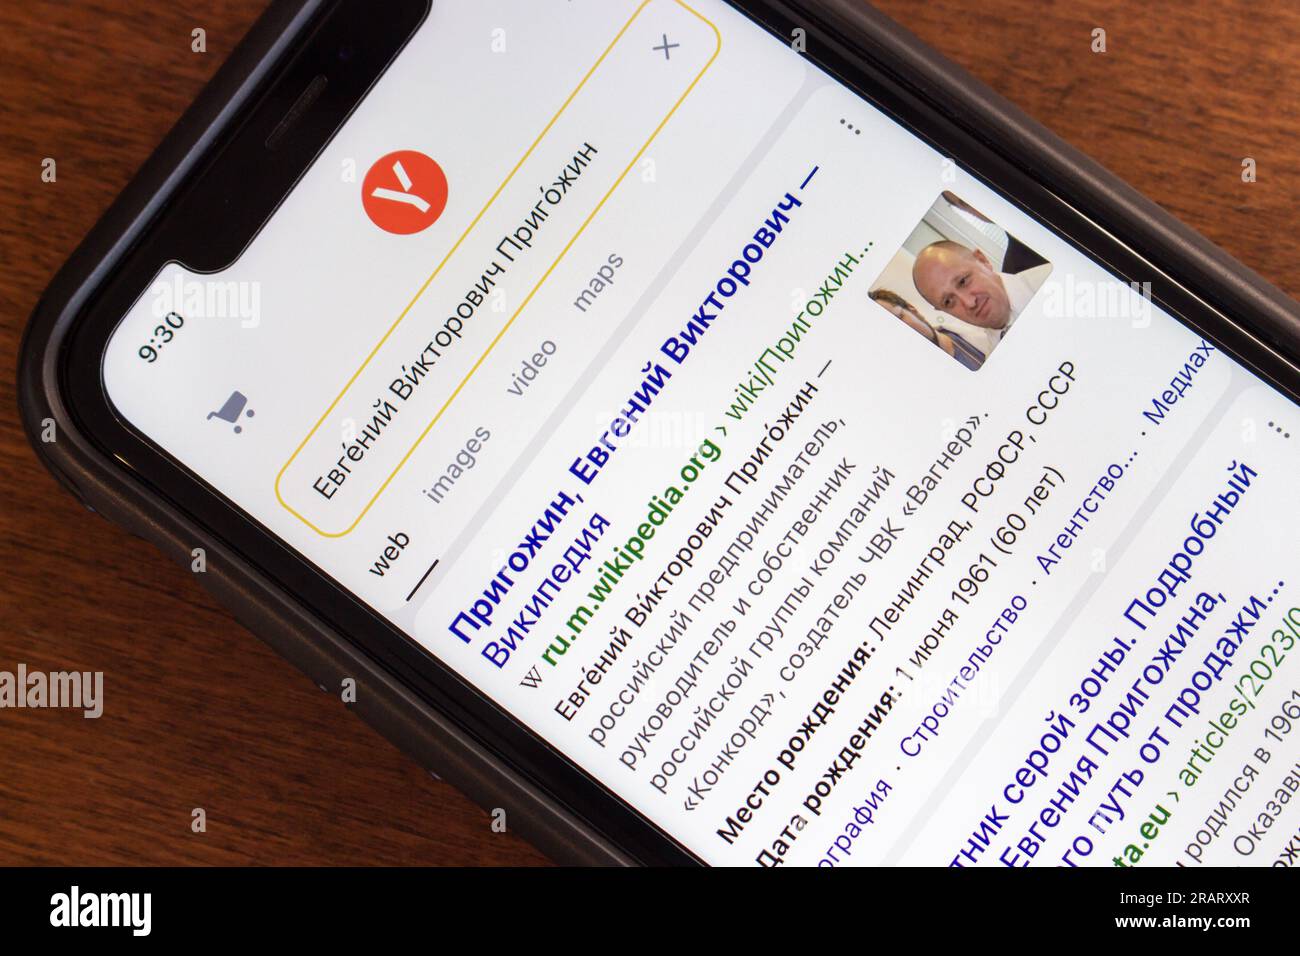 Search result of Yevgeny Prigozhin on Yandex website seen in an iPhone screen. Yevgeny Viktorovich Prigozhin is a Russian oligarch, mercenary leader Stock Photo